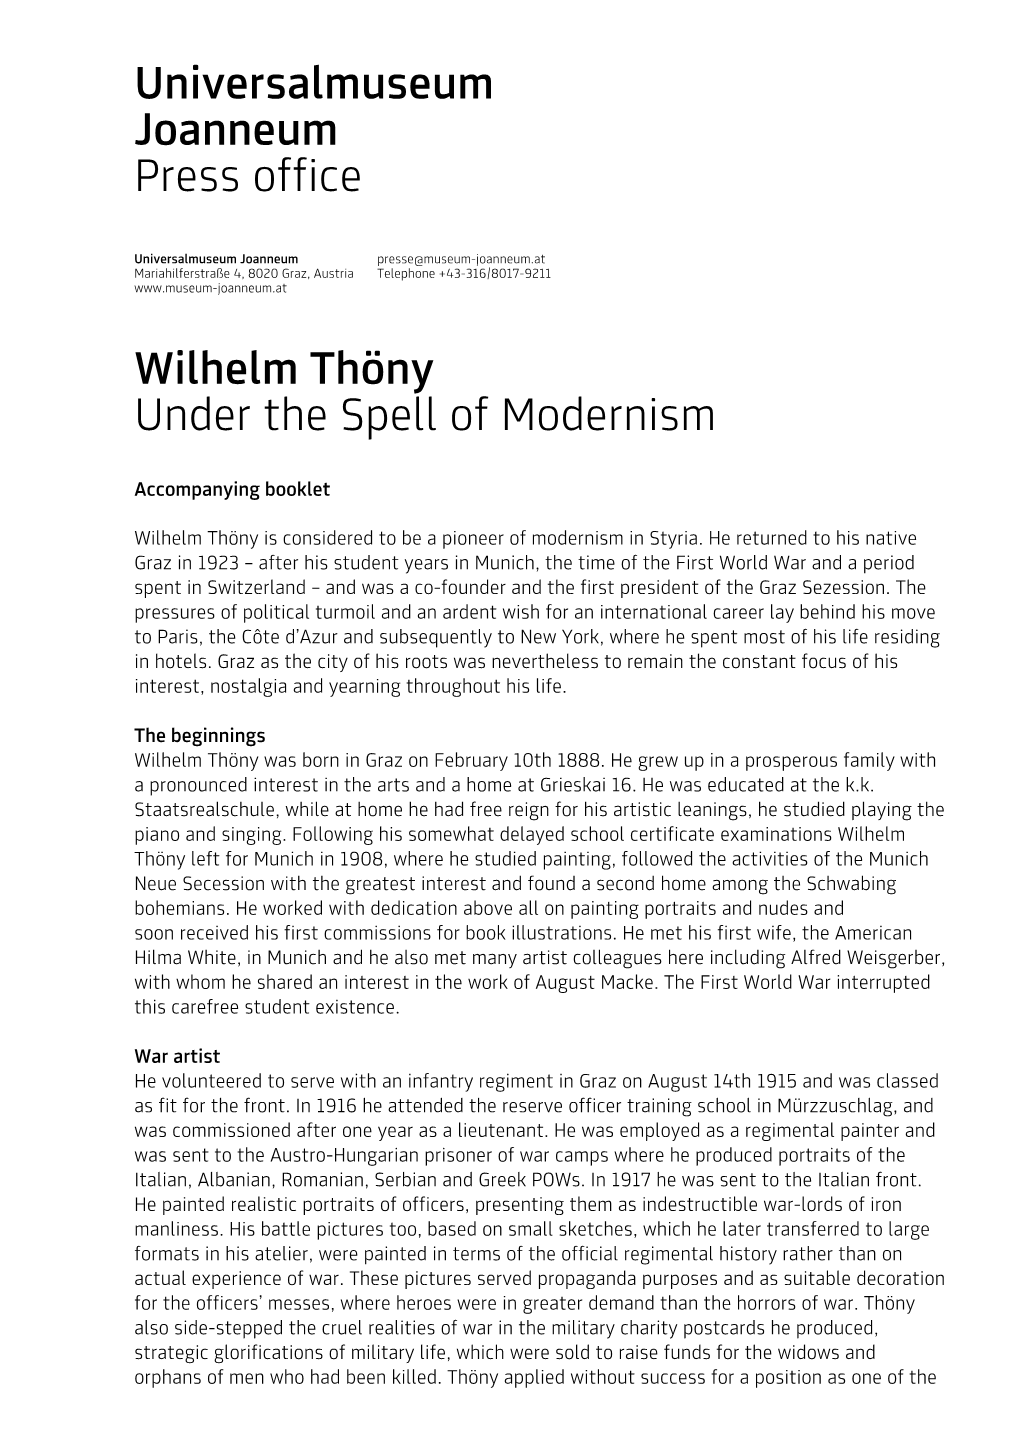 Wilhelm Thöny Under the Spell of Modernism